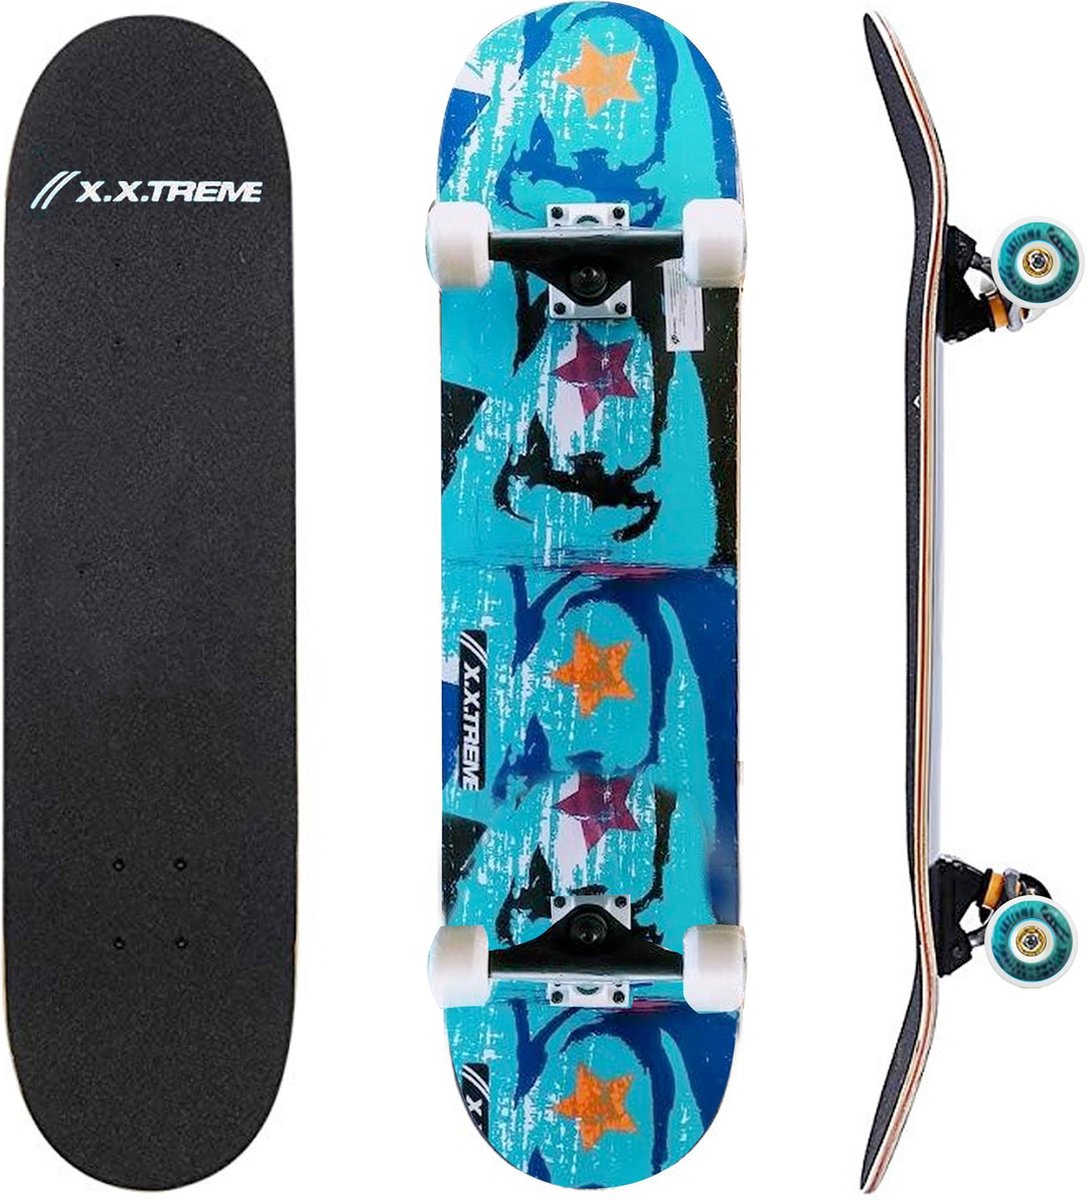 X.X.TREME - Skateboard - 